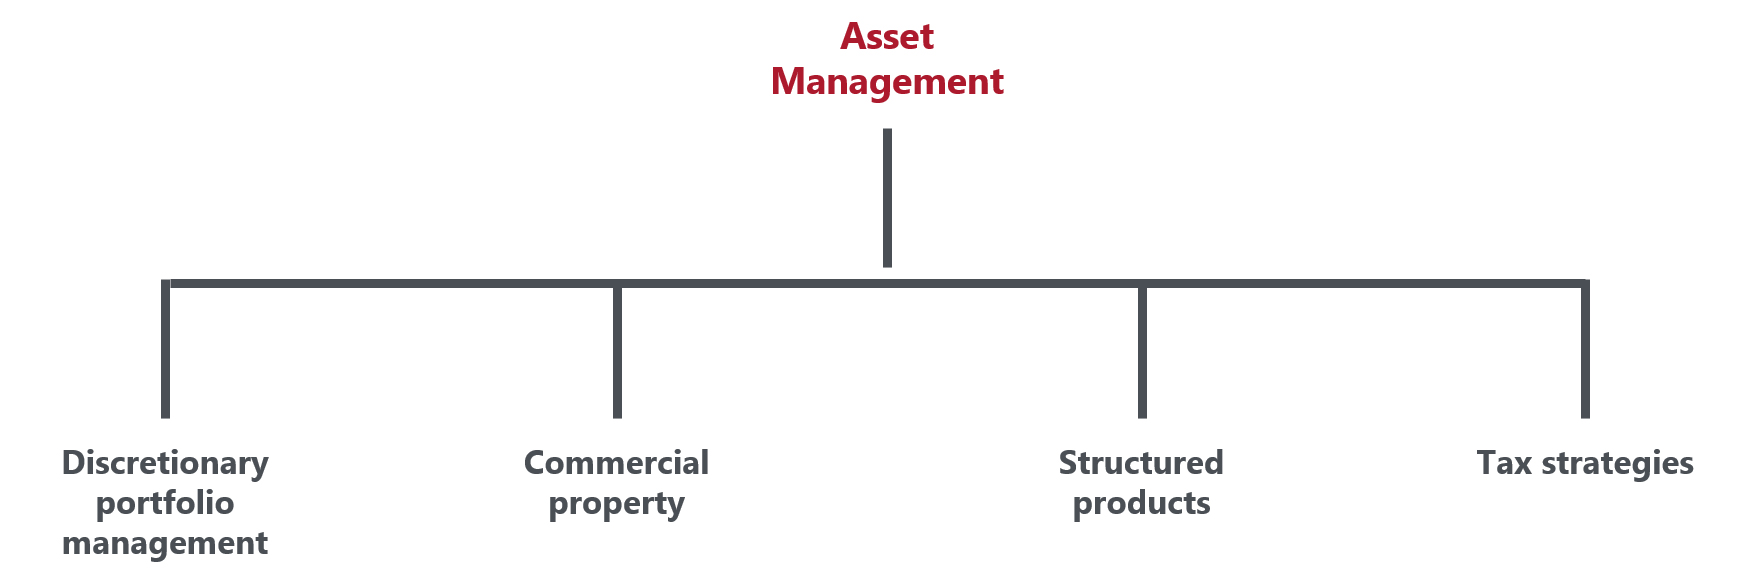 types of asset management diagram